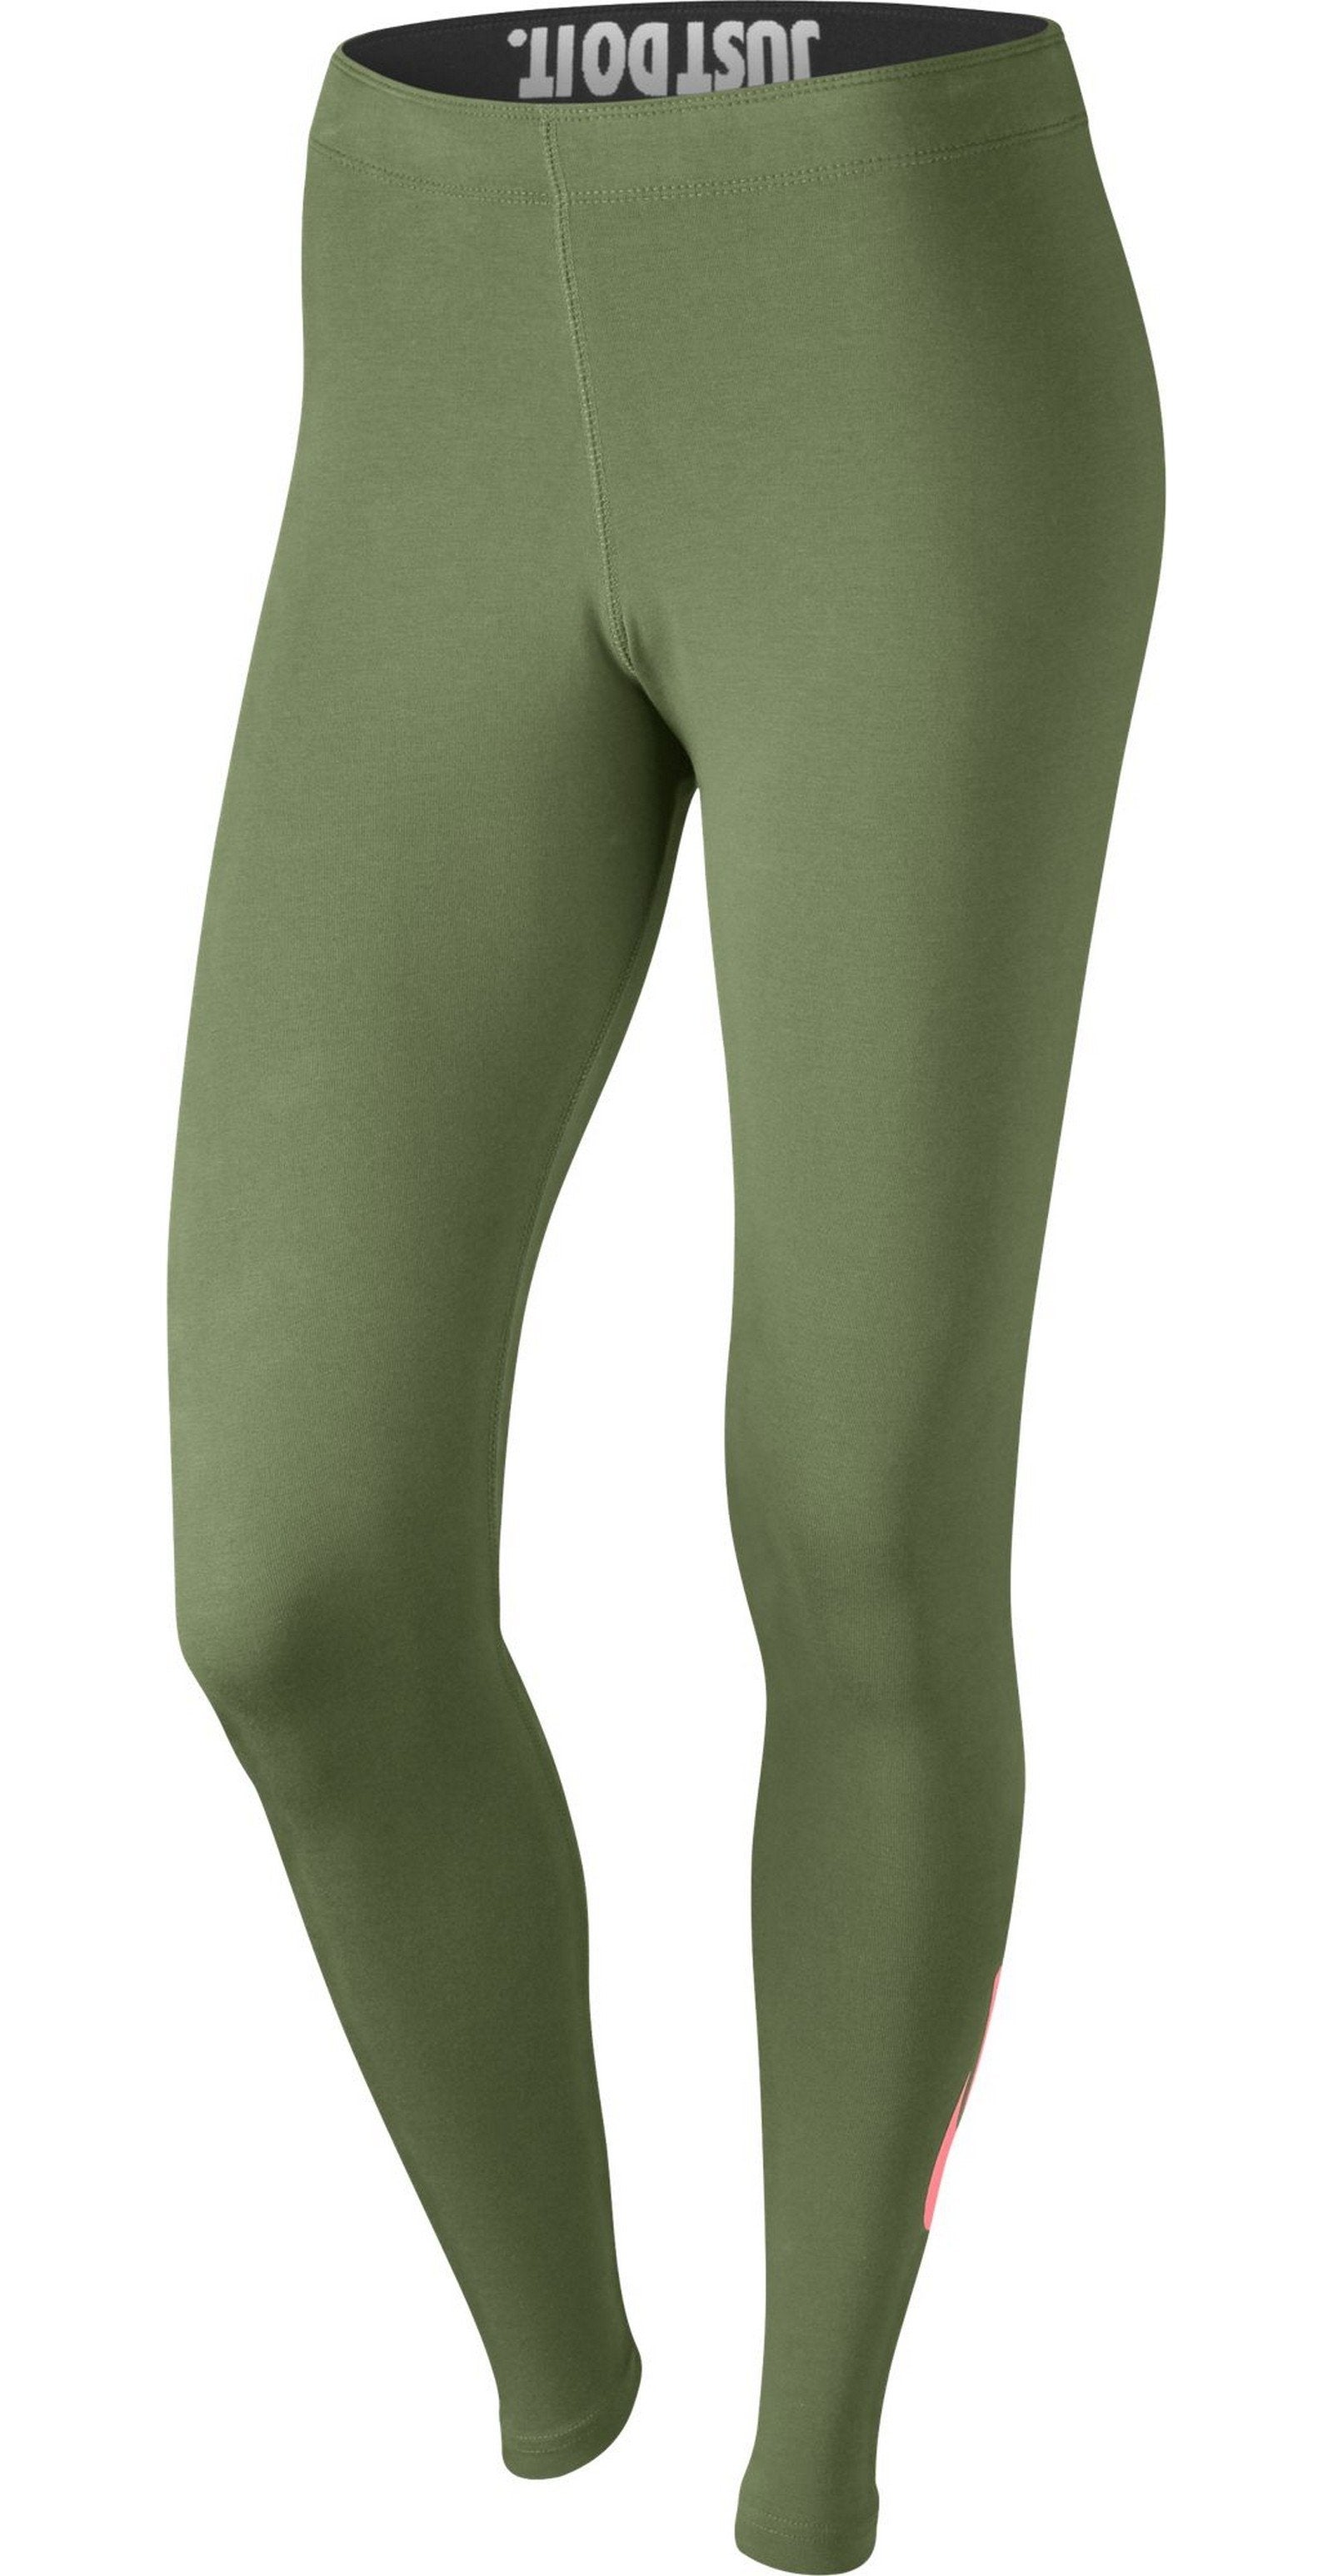 green leggings nike